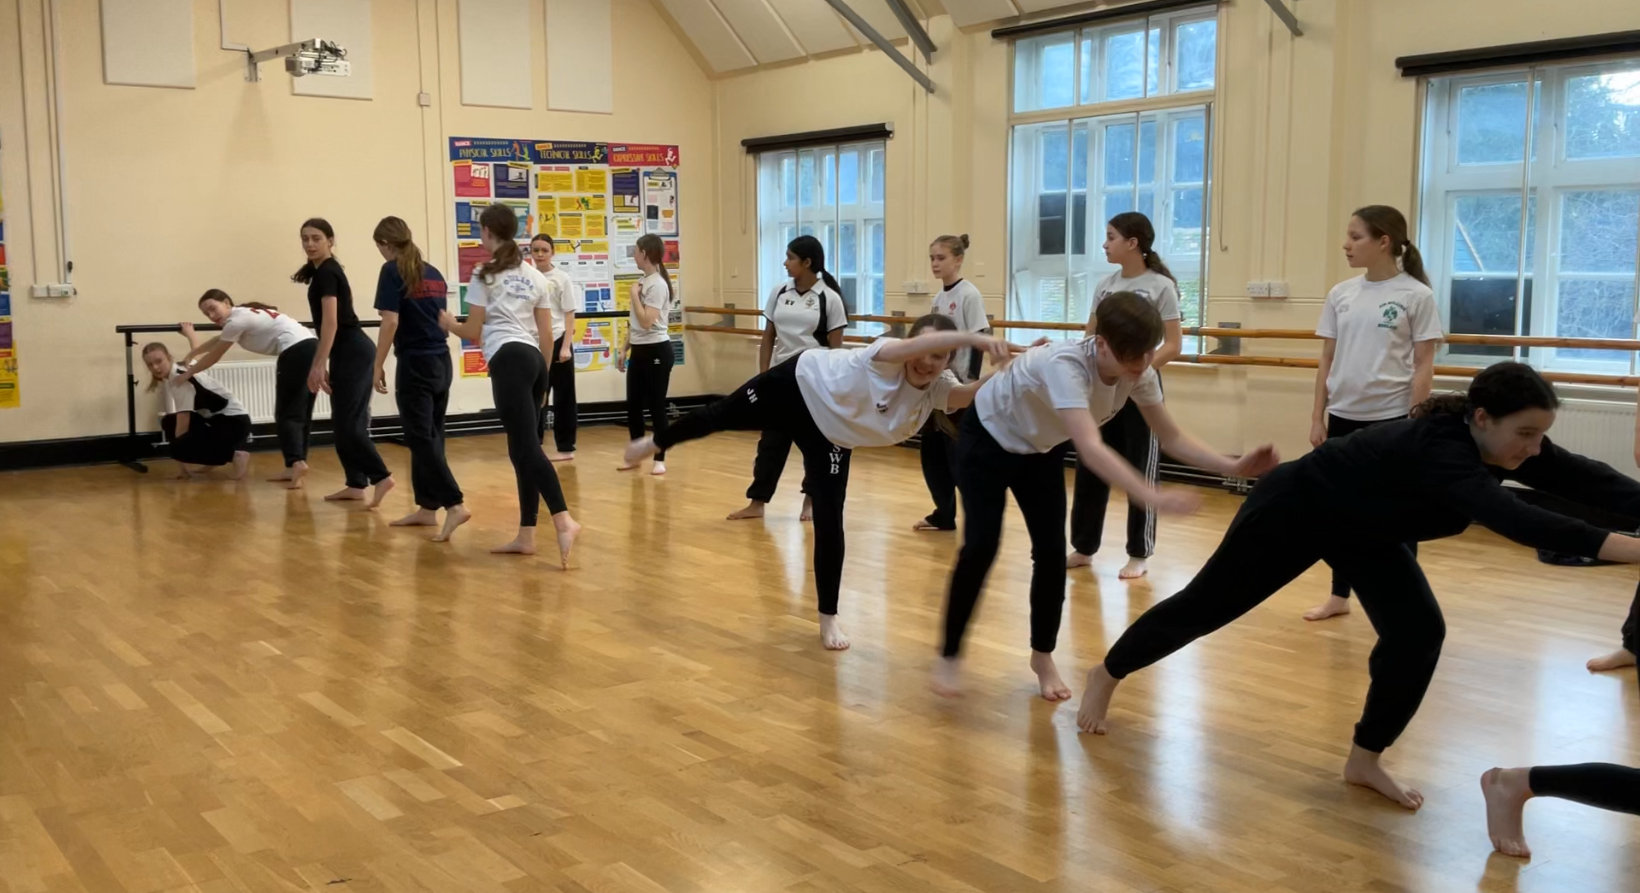 Exploring behaviour in dance lessons